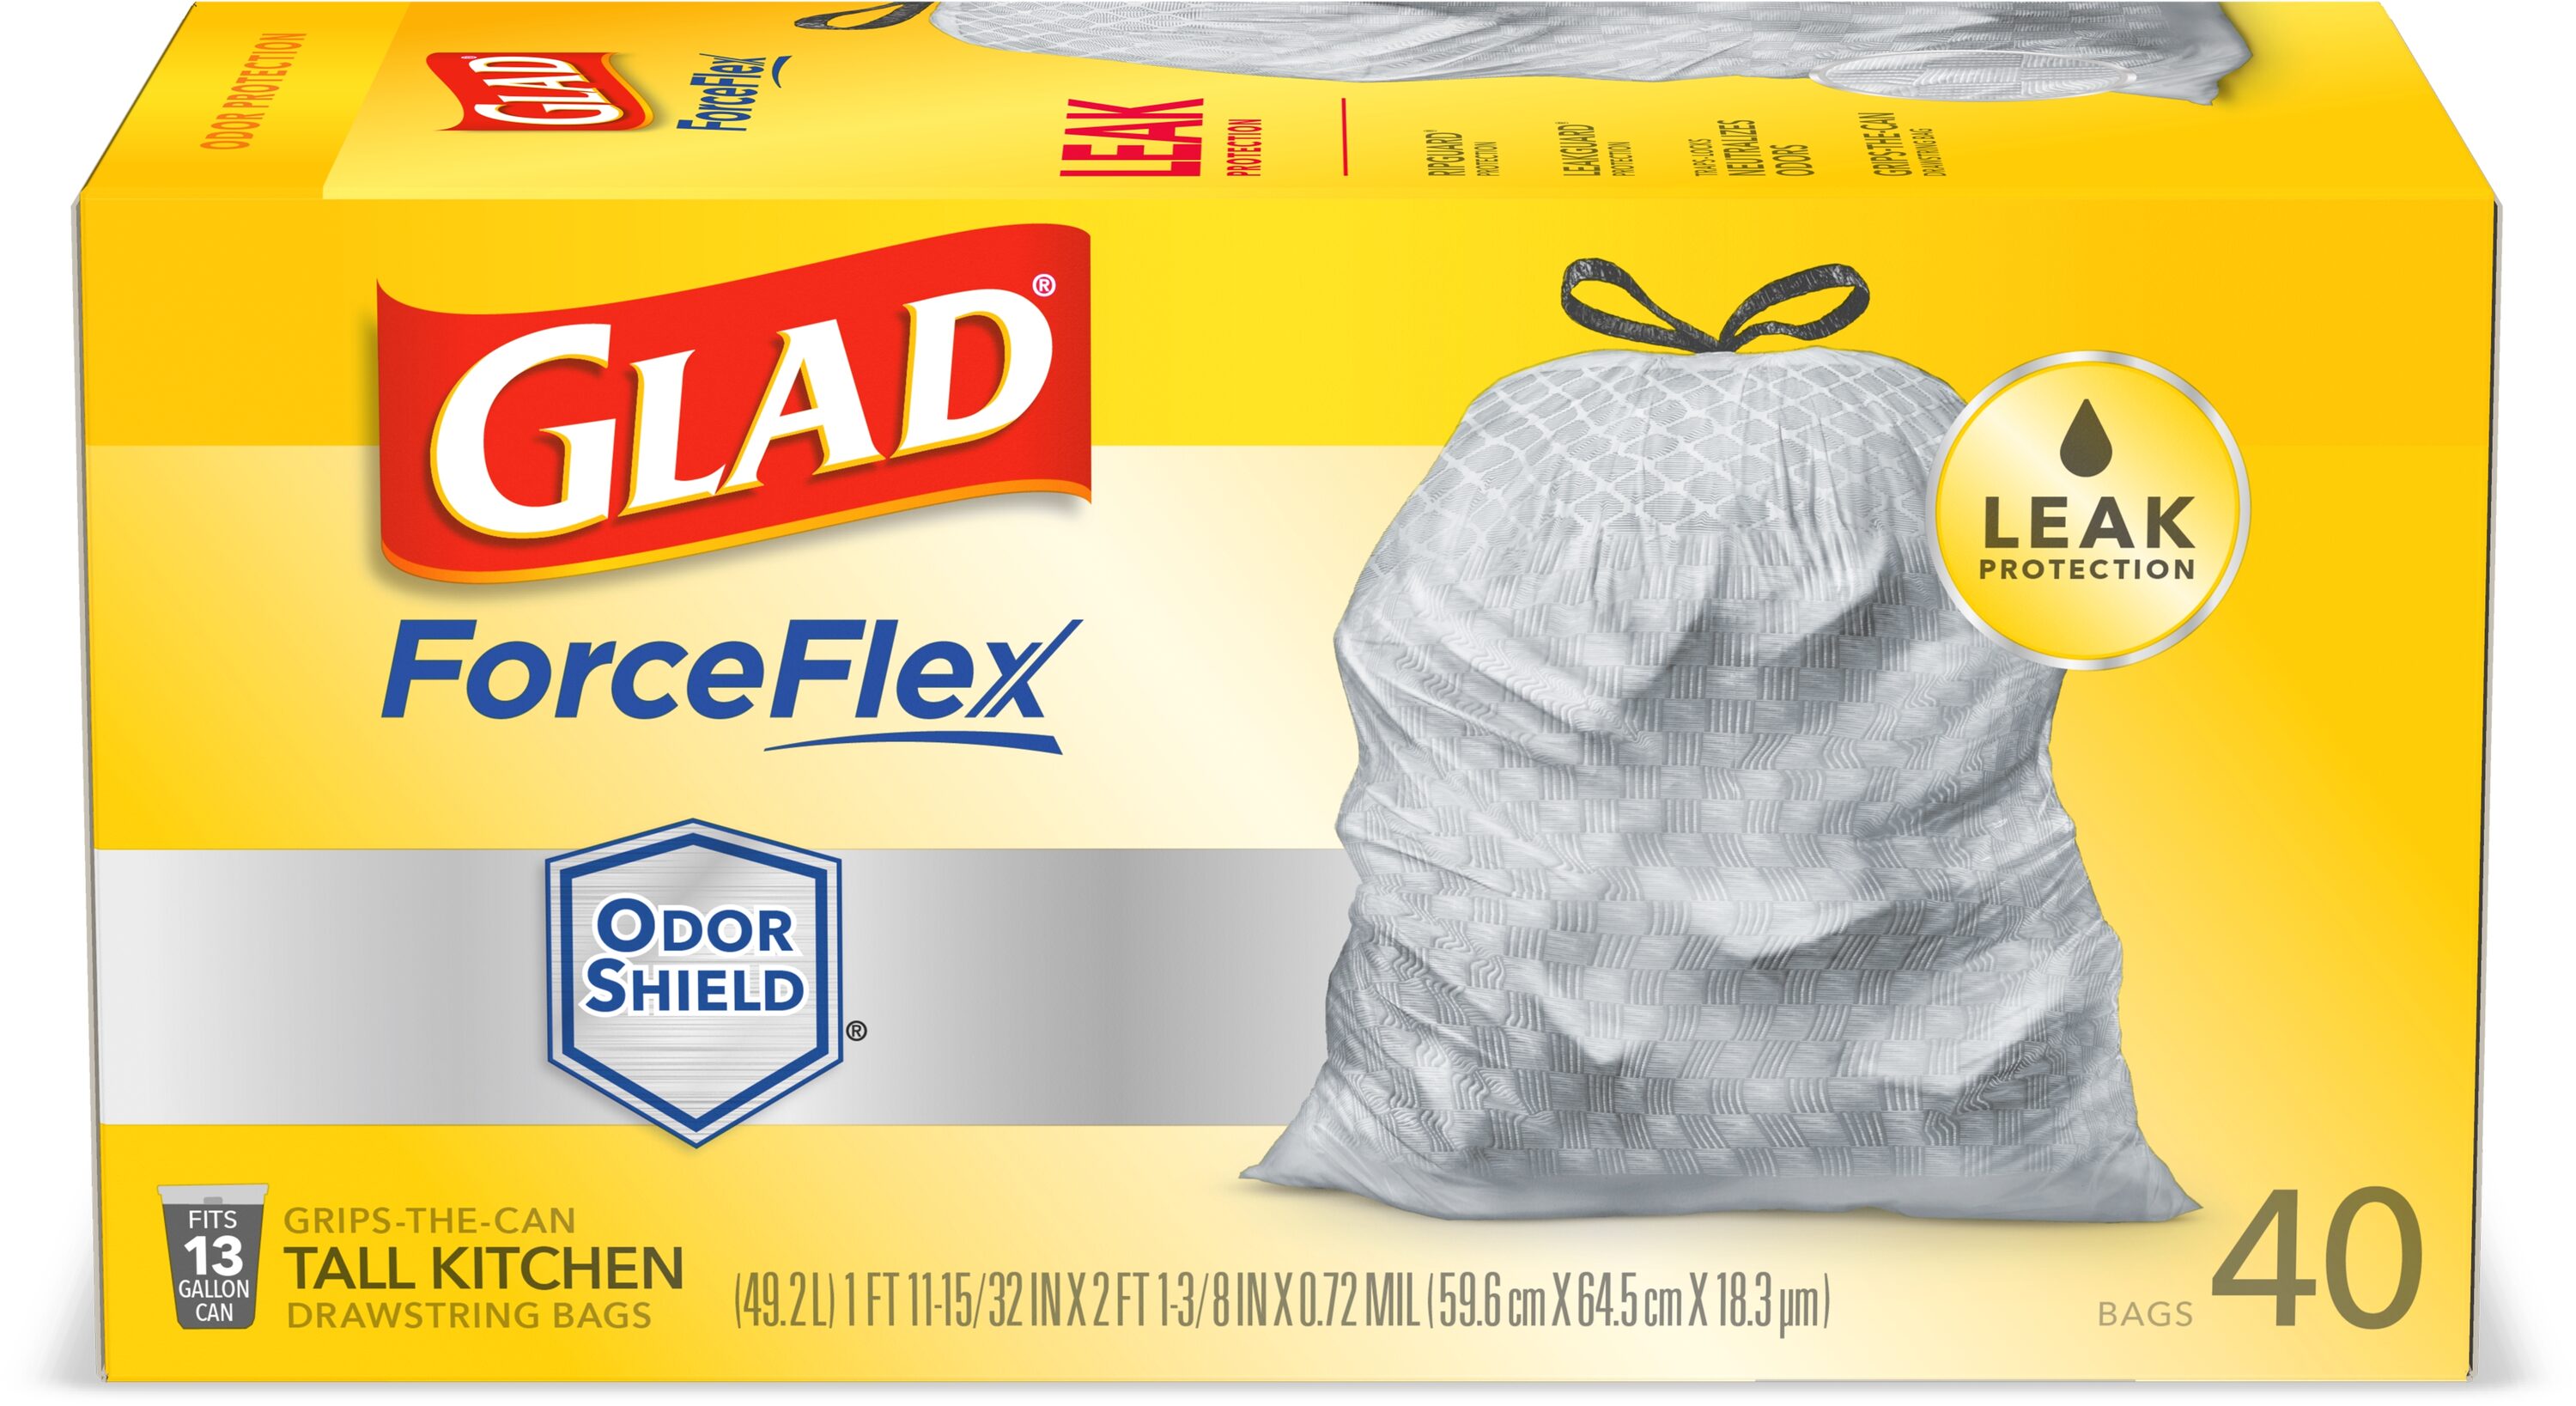 Kitchen ForceFlex MaxStrength™ Trash Bags Mediterranean Lavender Scent